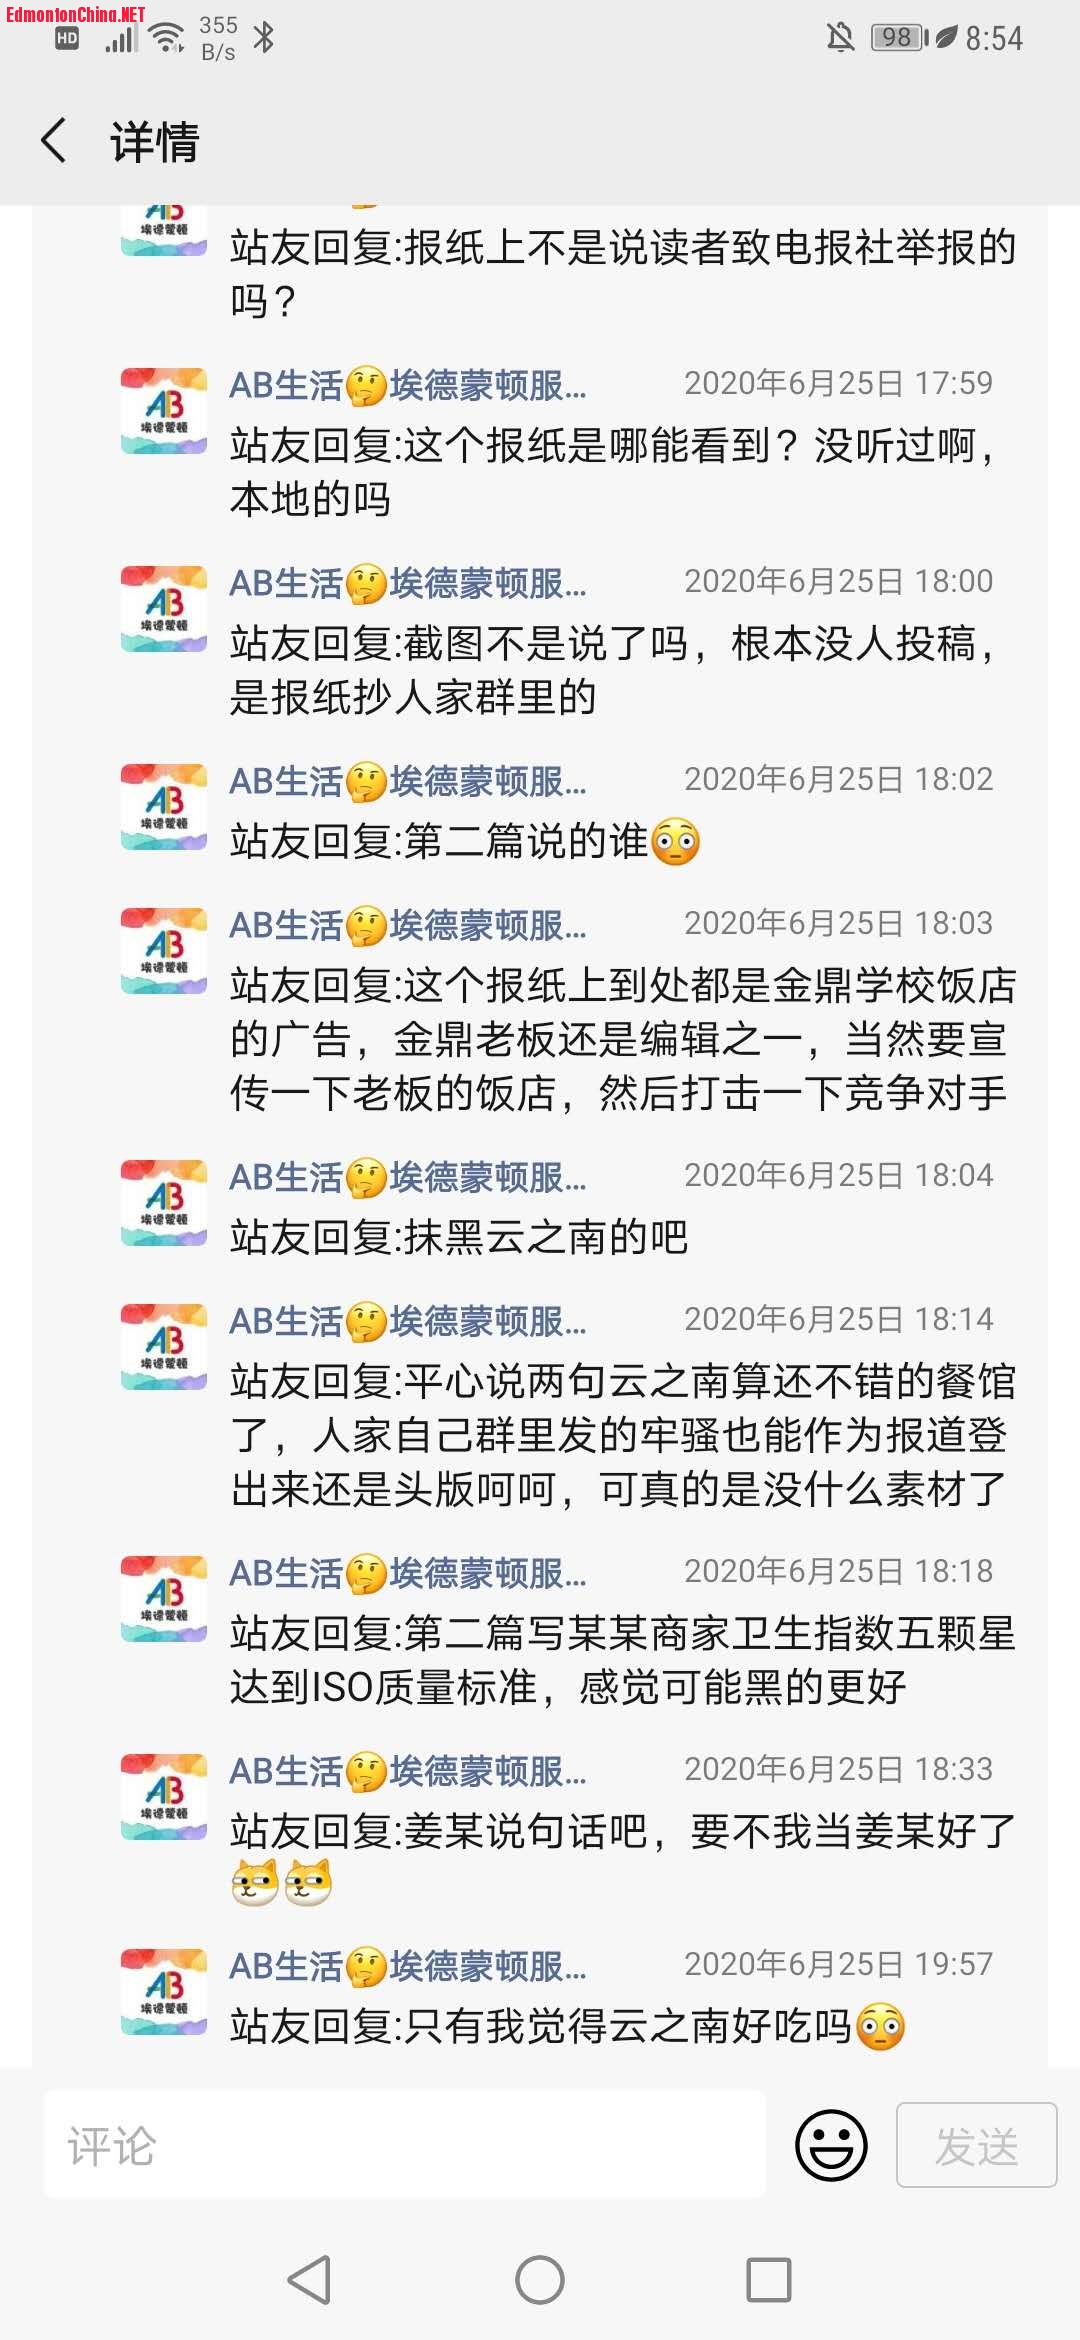 WeChat ab.jpg